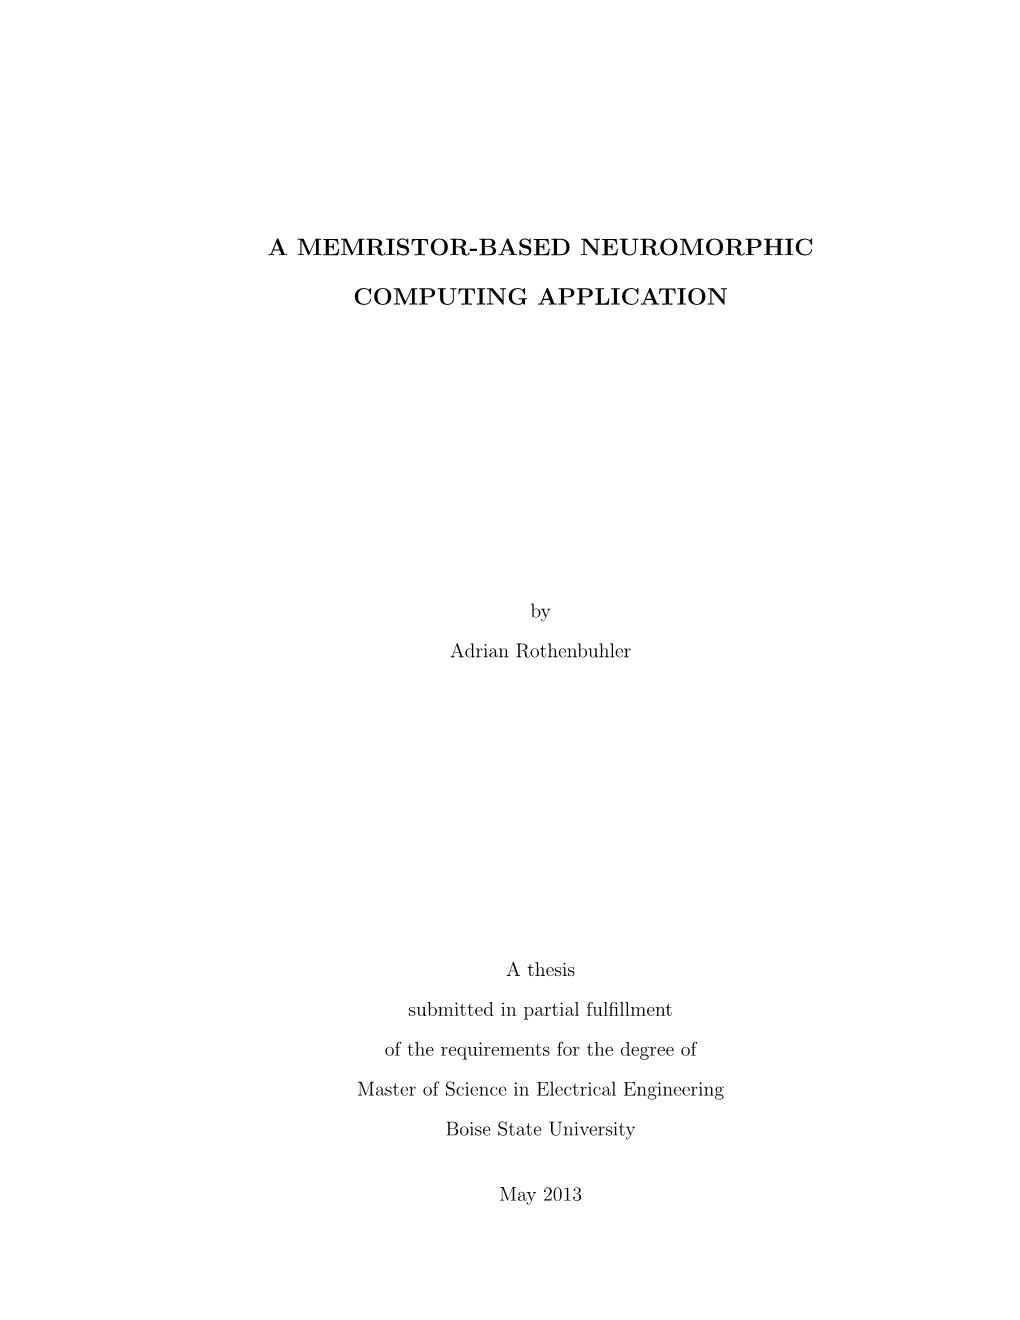 A Memristor-Based Neuromorphic Computing Application